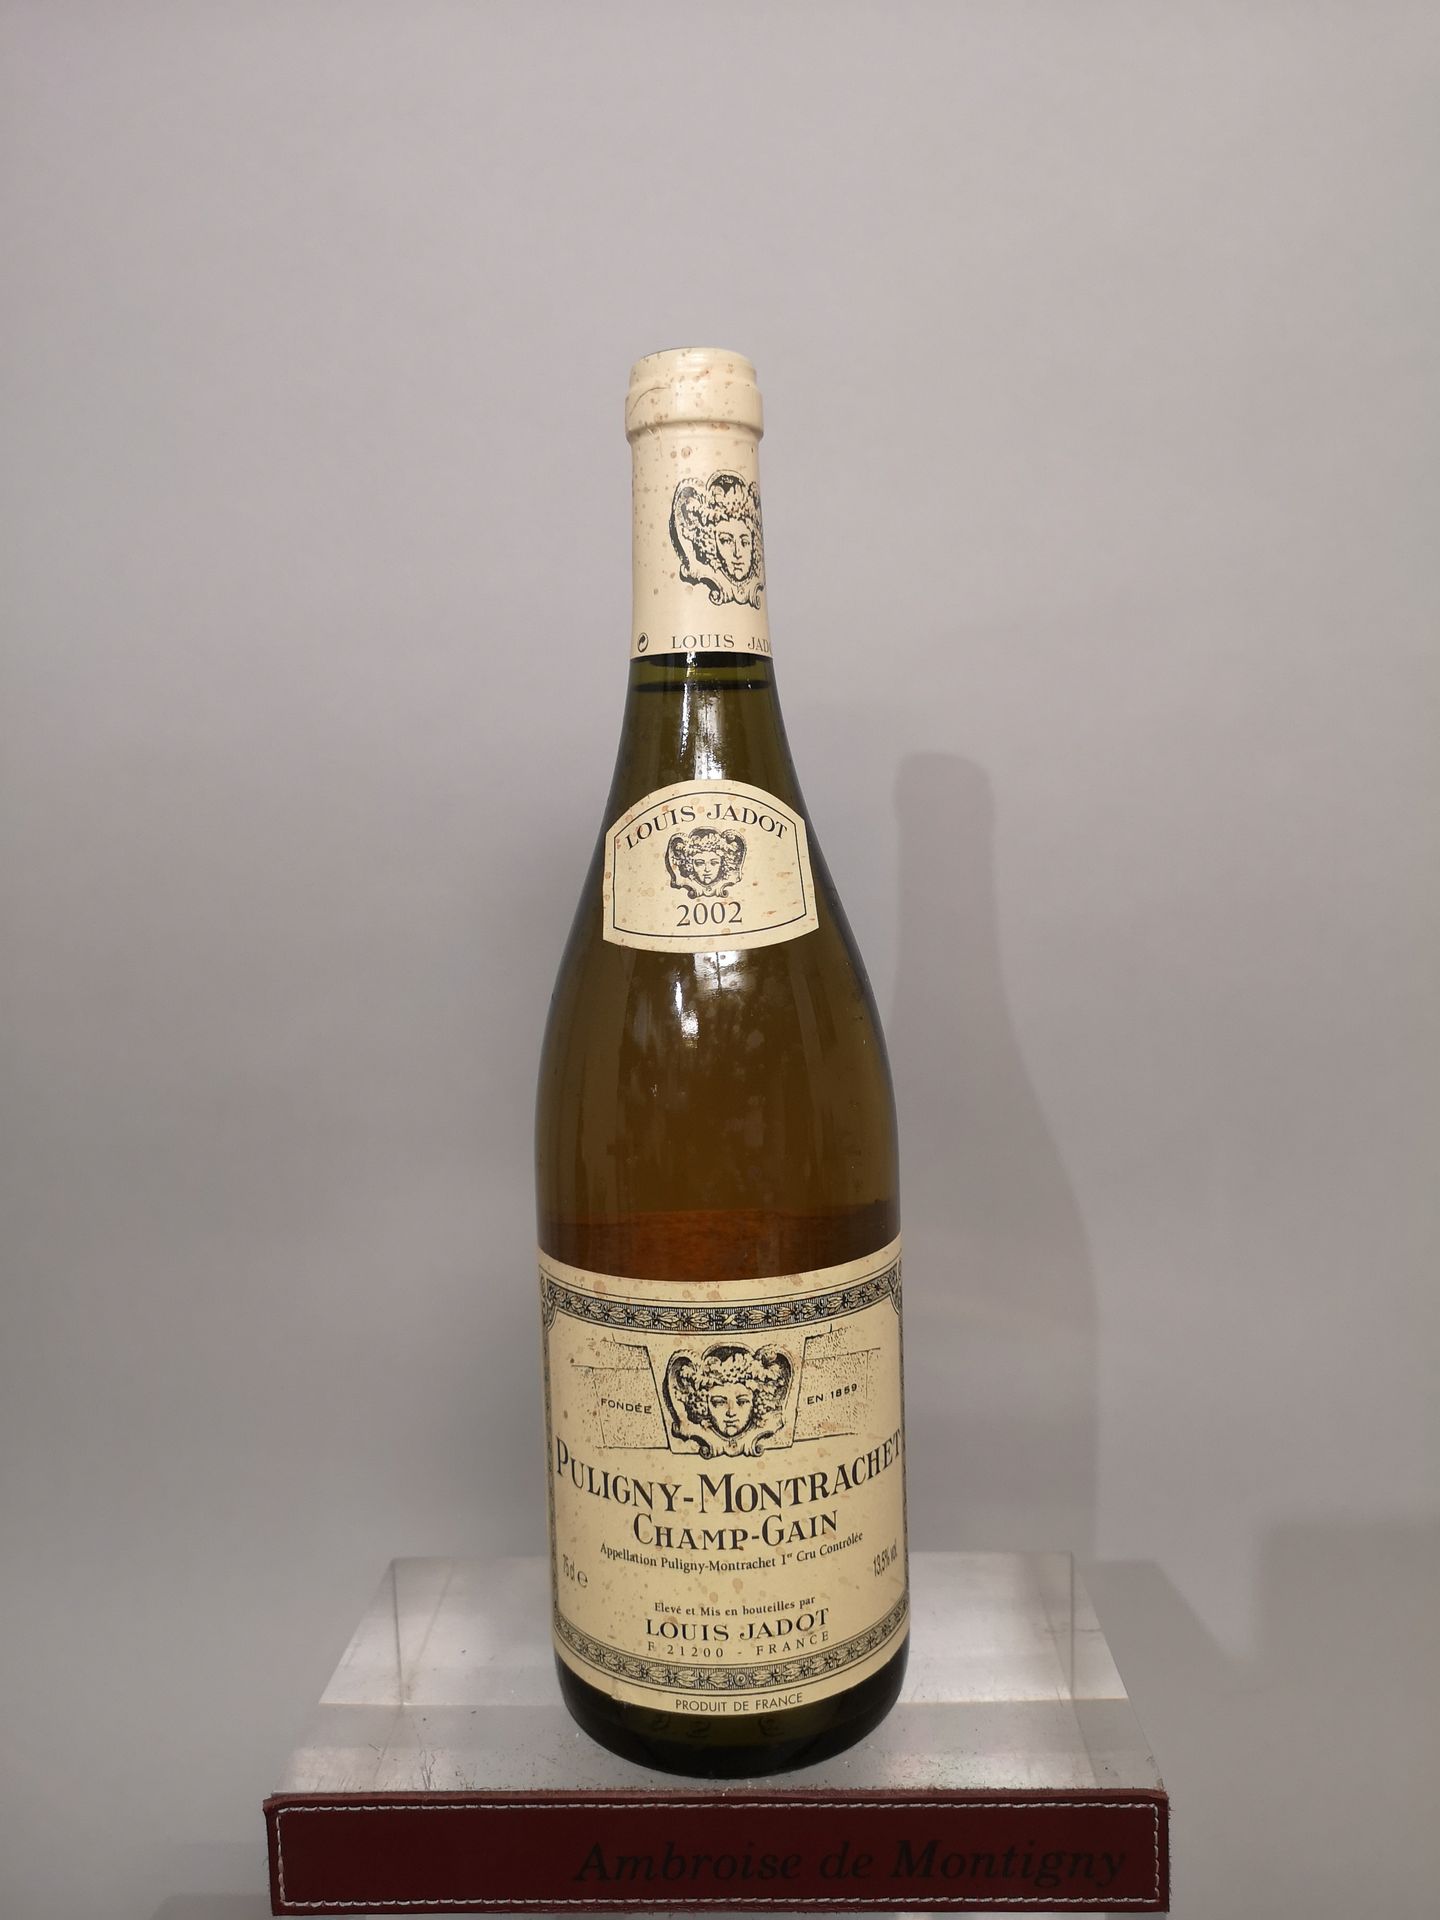 Null 1瓶PULIGNY MONTRACHET 1er cru "Champ-Gain" - L. JADOT 2002 

标签略有污点。